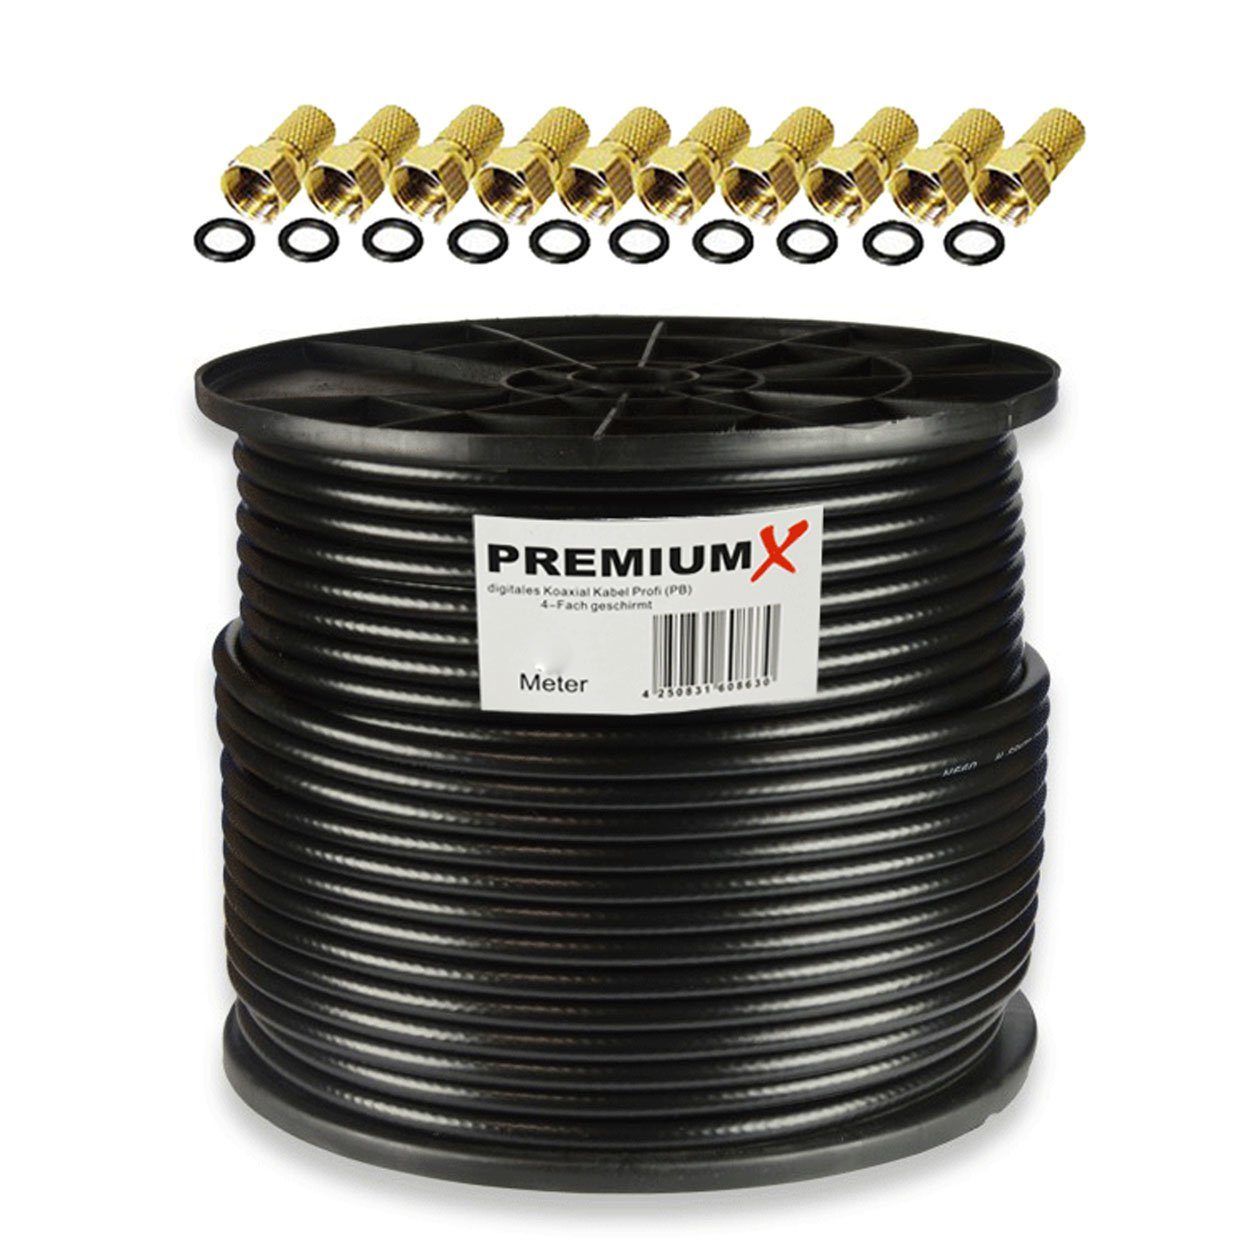 PremiumX Koaxialkabel PROFI SAT-Kabel F-Stecker 100m Schwarz 135dB KUPFER 4-fach 10x